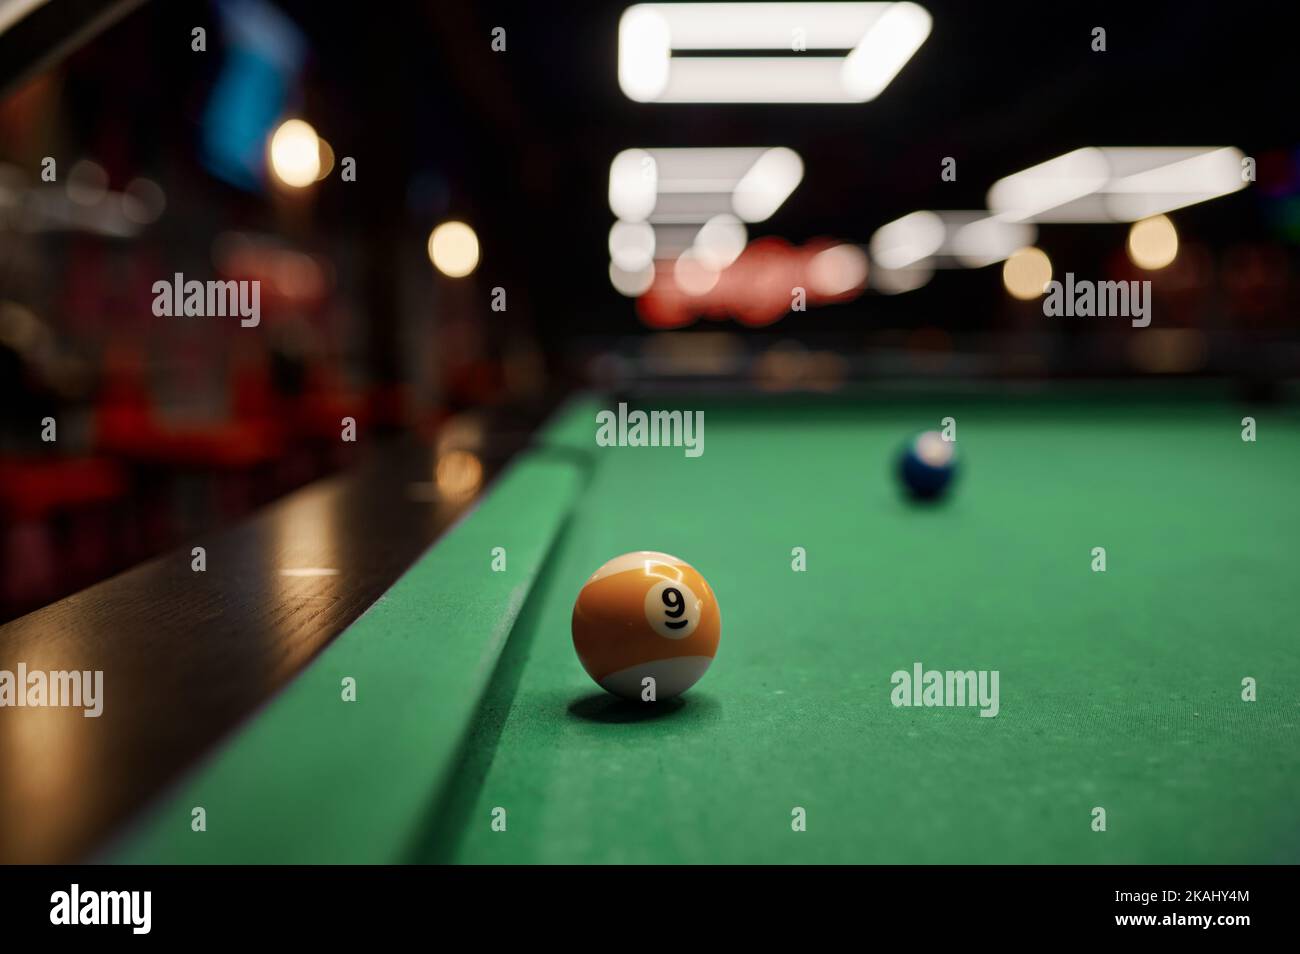 Billiard ball on pool table selective focus Stock Photo